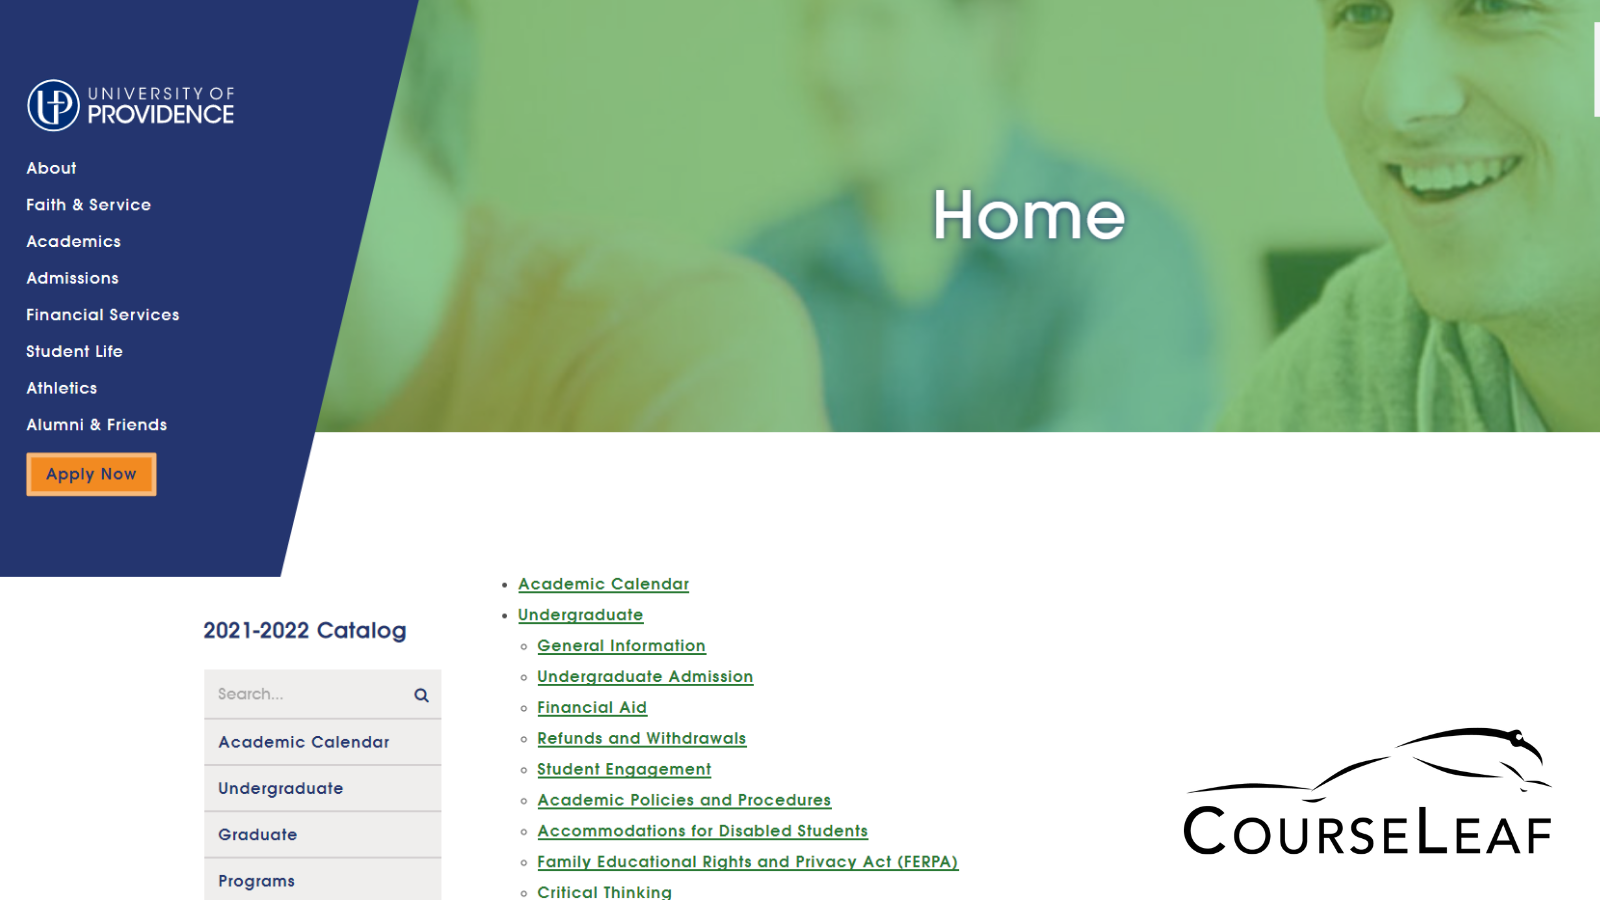 University of Providence CourseLeaf catalog homepage